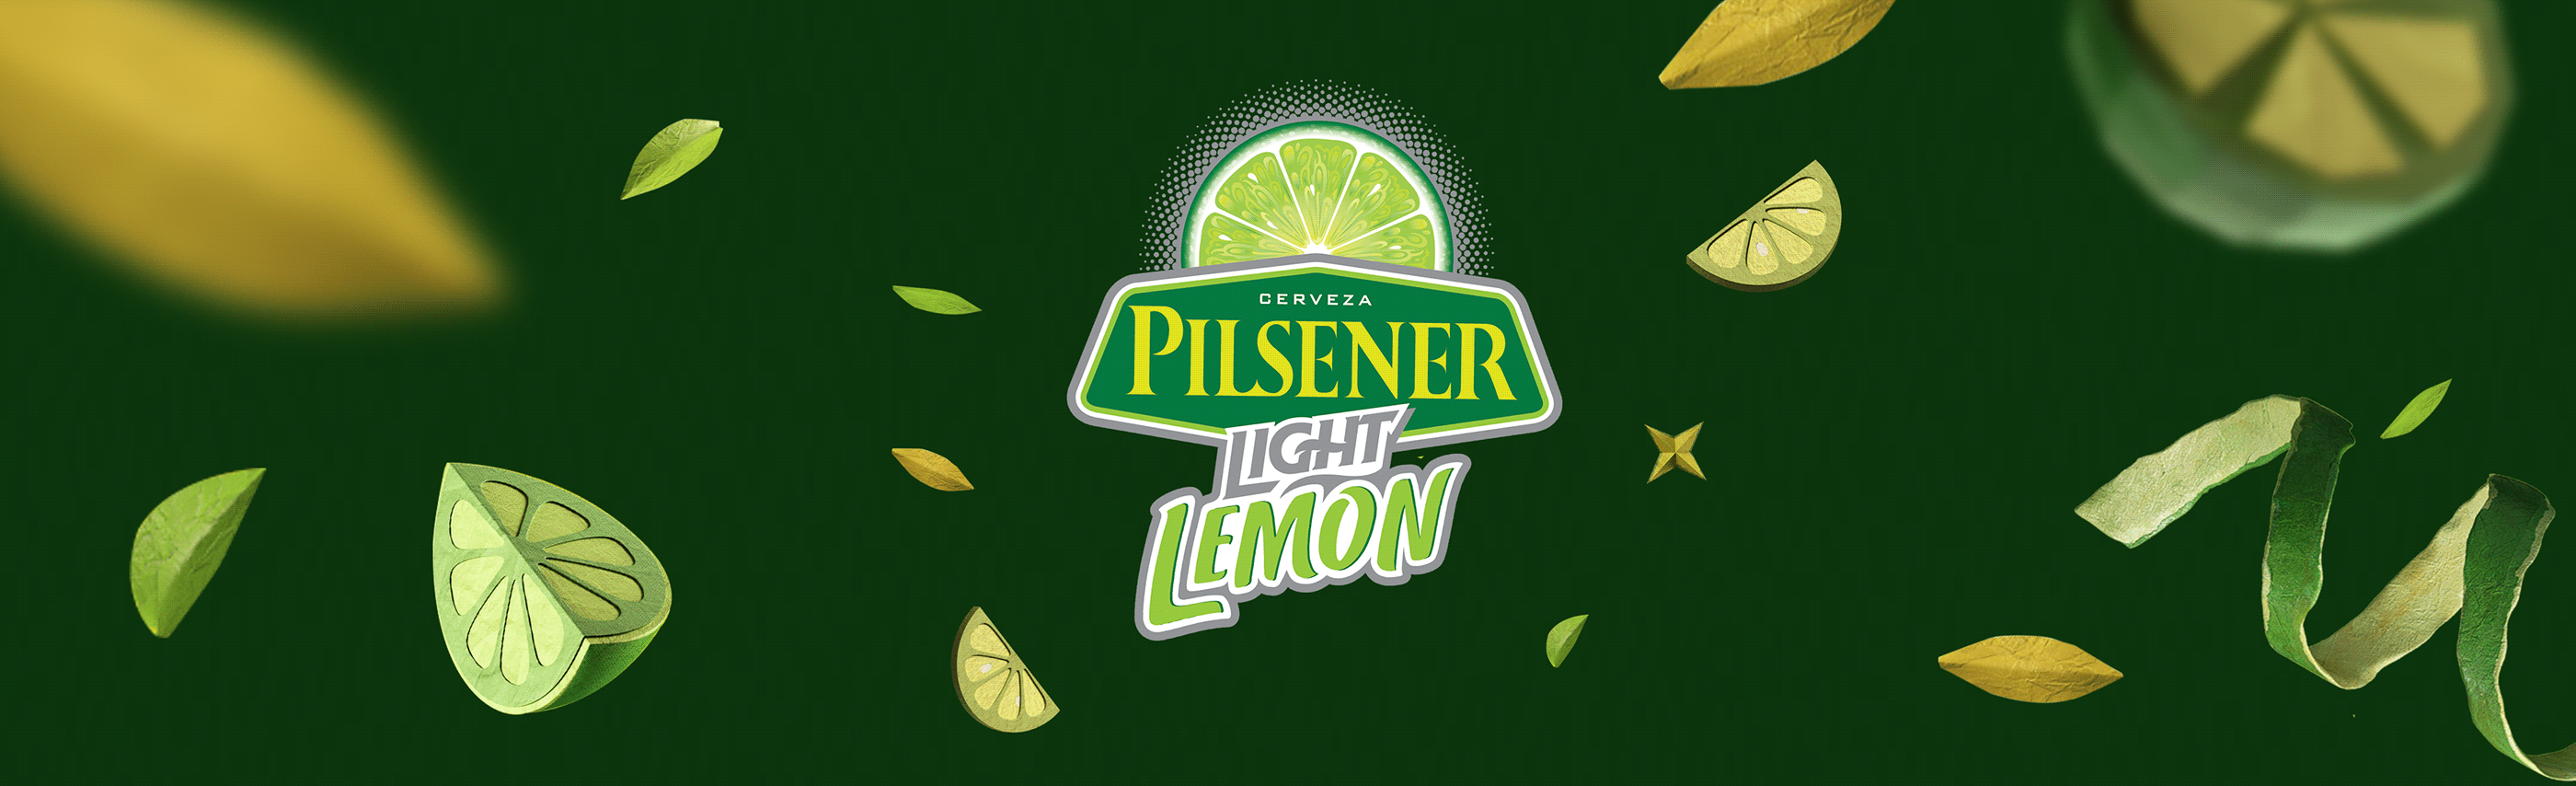 Pilsener Light Lemon on Behancefe4bc687894453.5e0129fe219ea.png